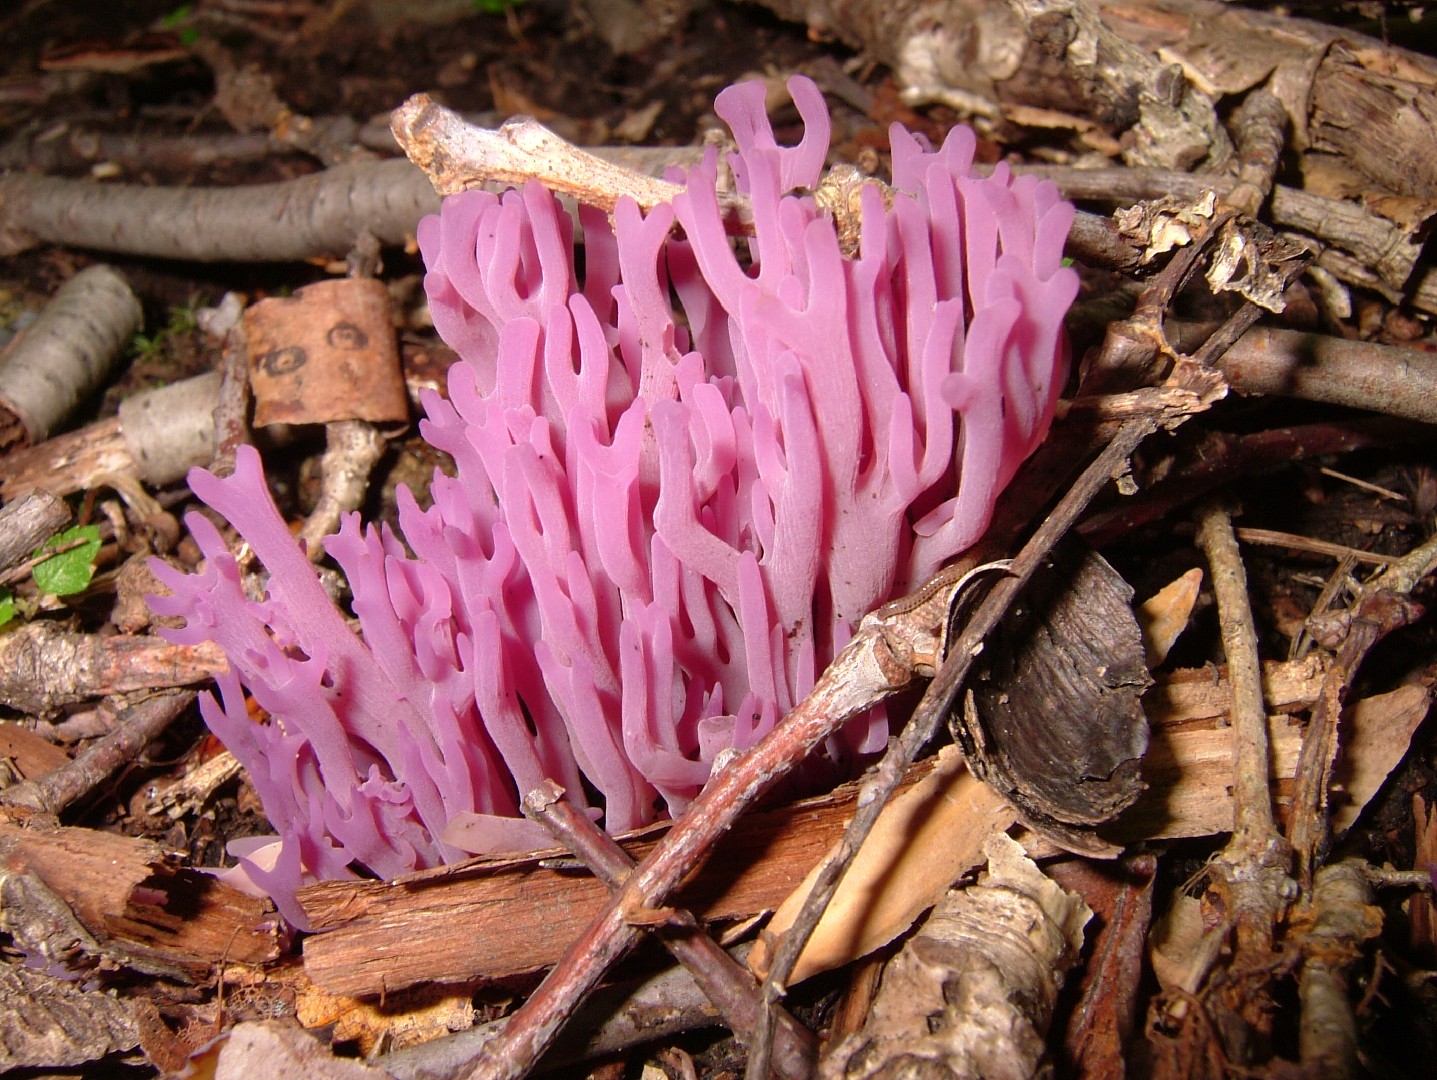 Violet coral (Clavaria zollingeri)